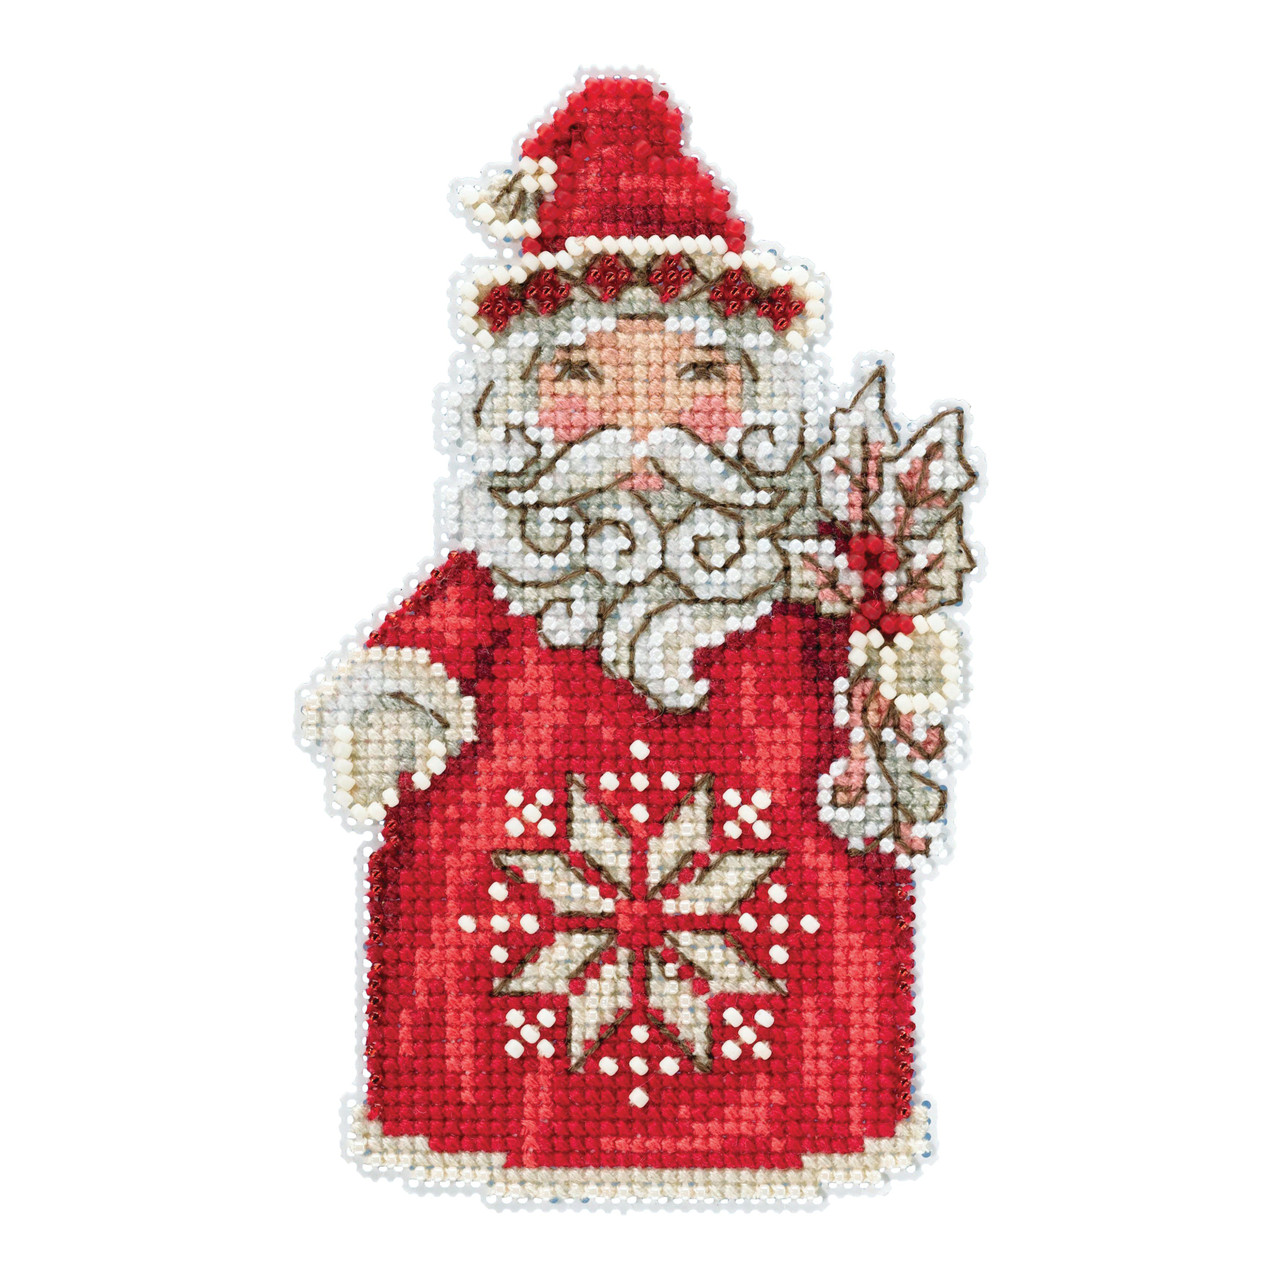 Christmas Lantern Cross Stitch Ornament Kit Mill Hill 2019 Winter Holiday  MH181934